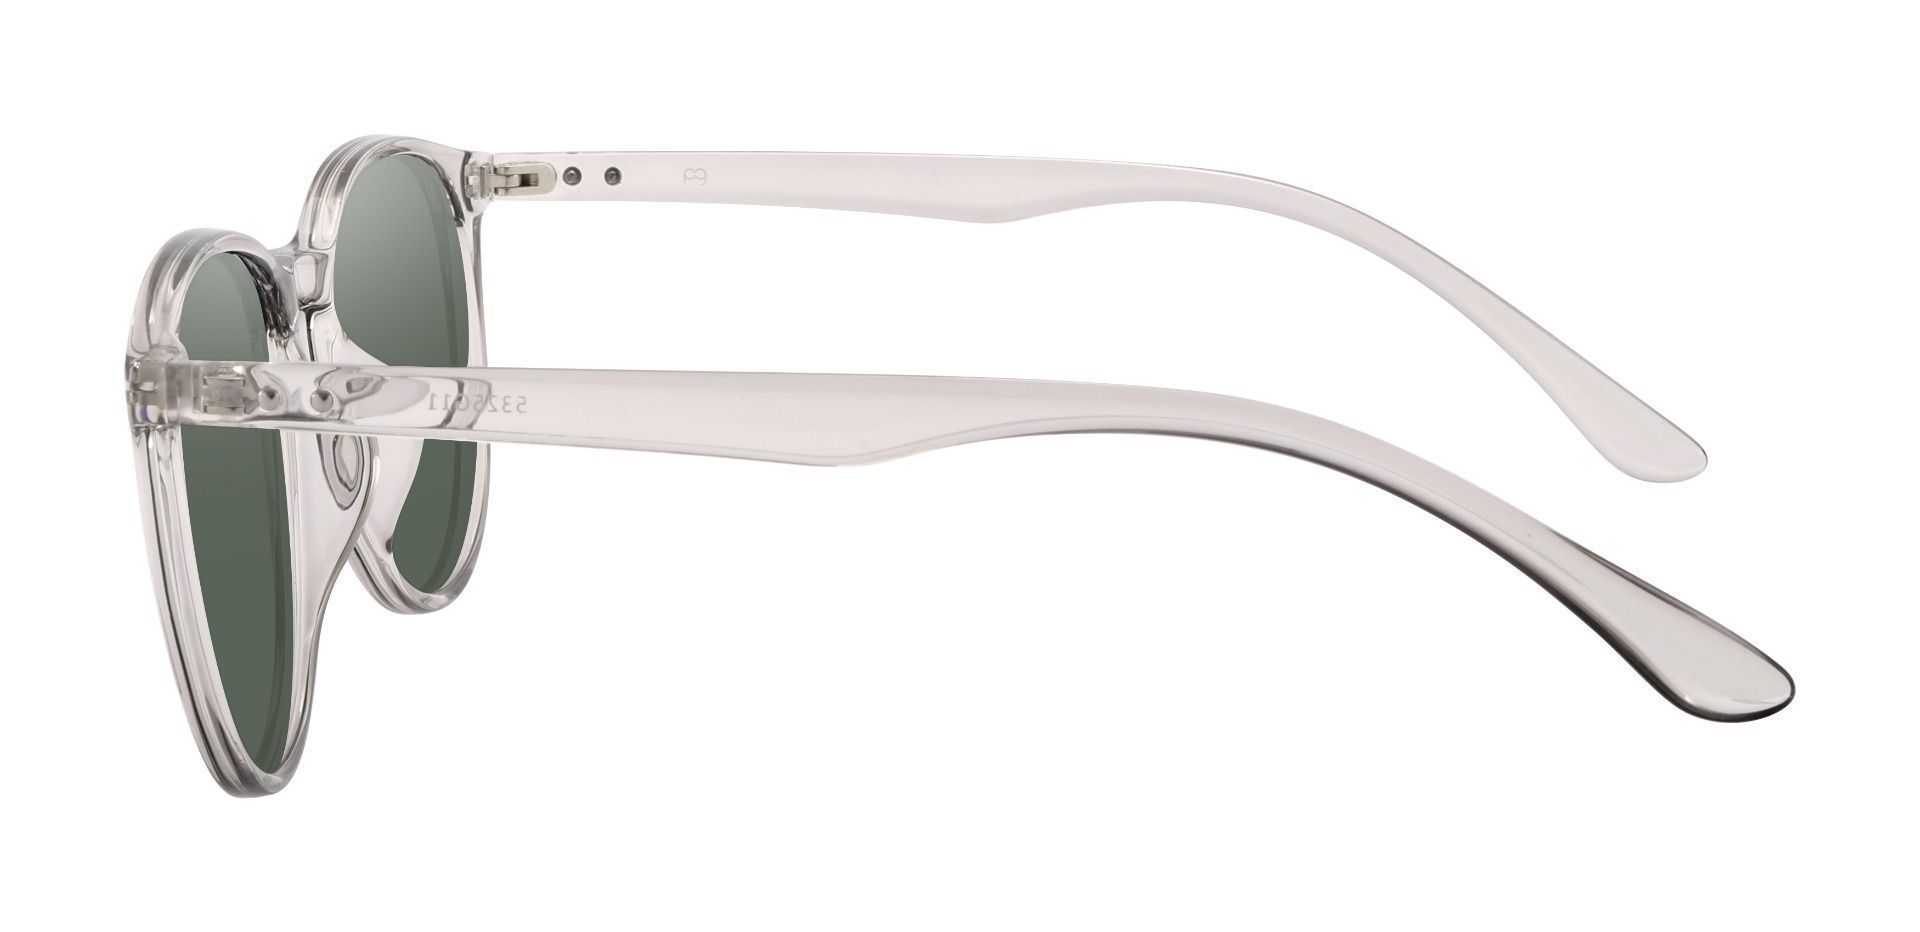 Maple Oversized Oval Prescription Sunglasses - Gray Frame With Green Lenses